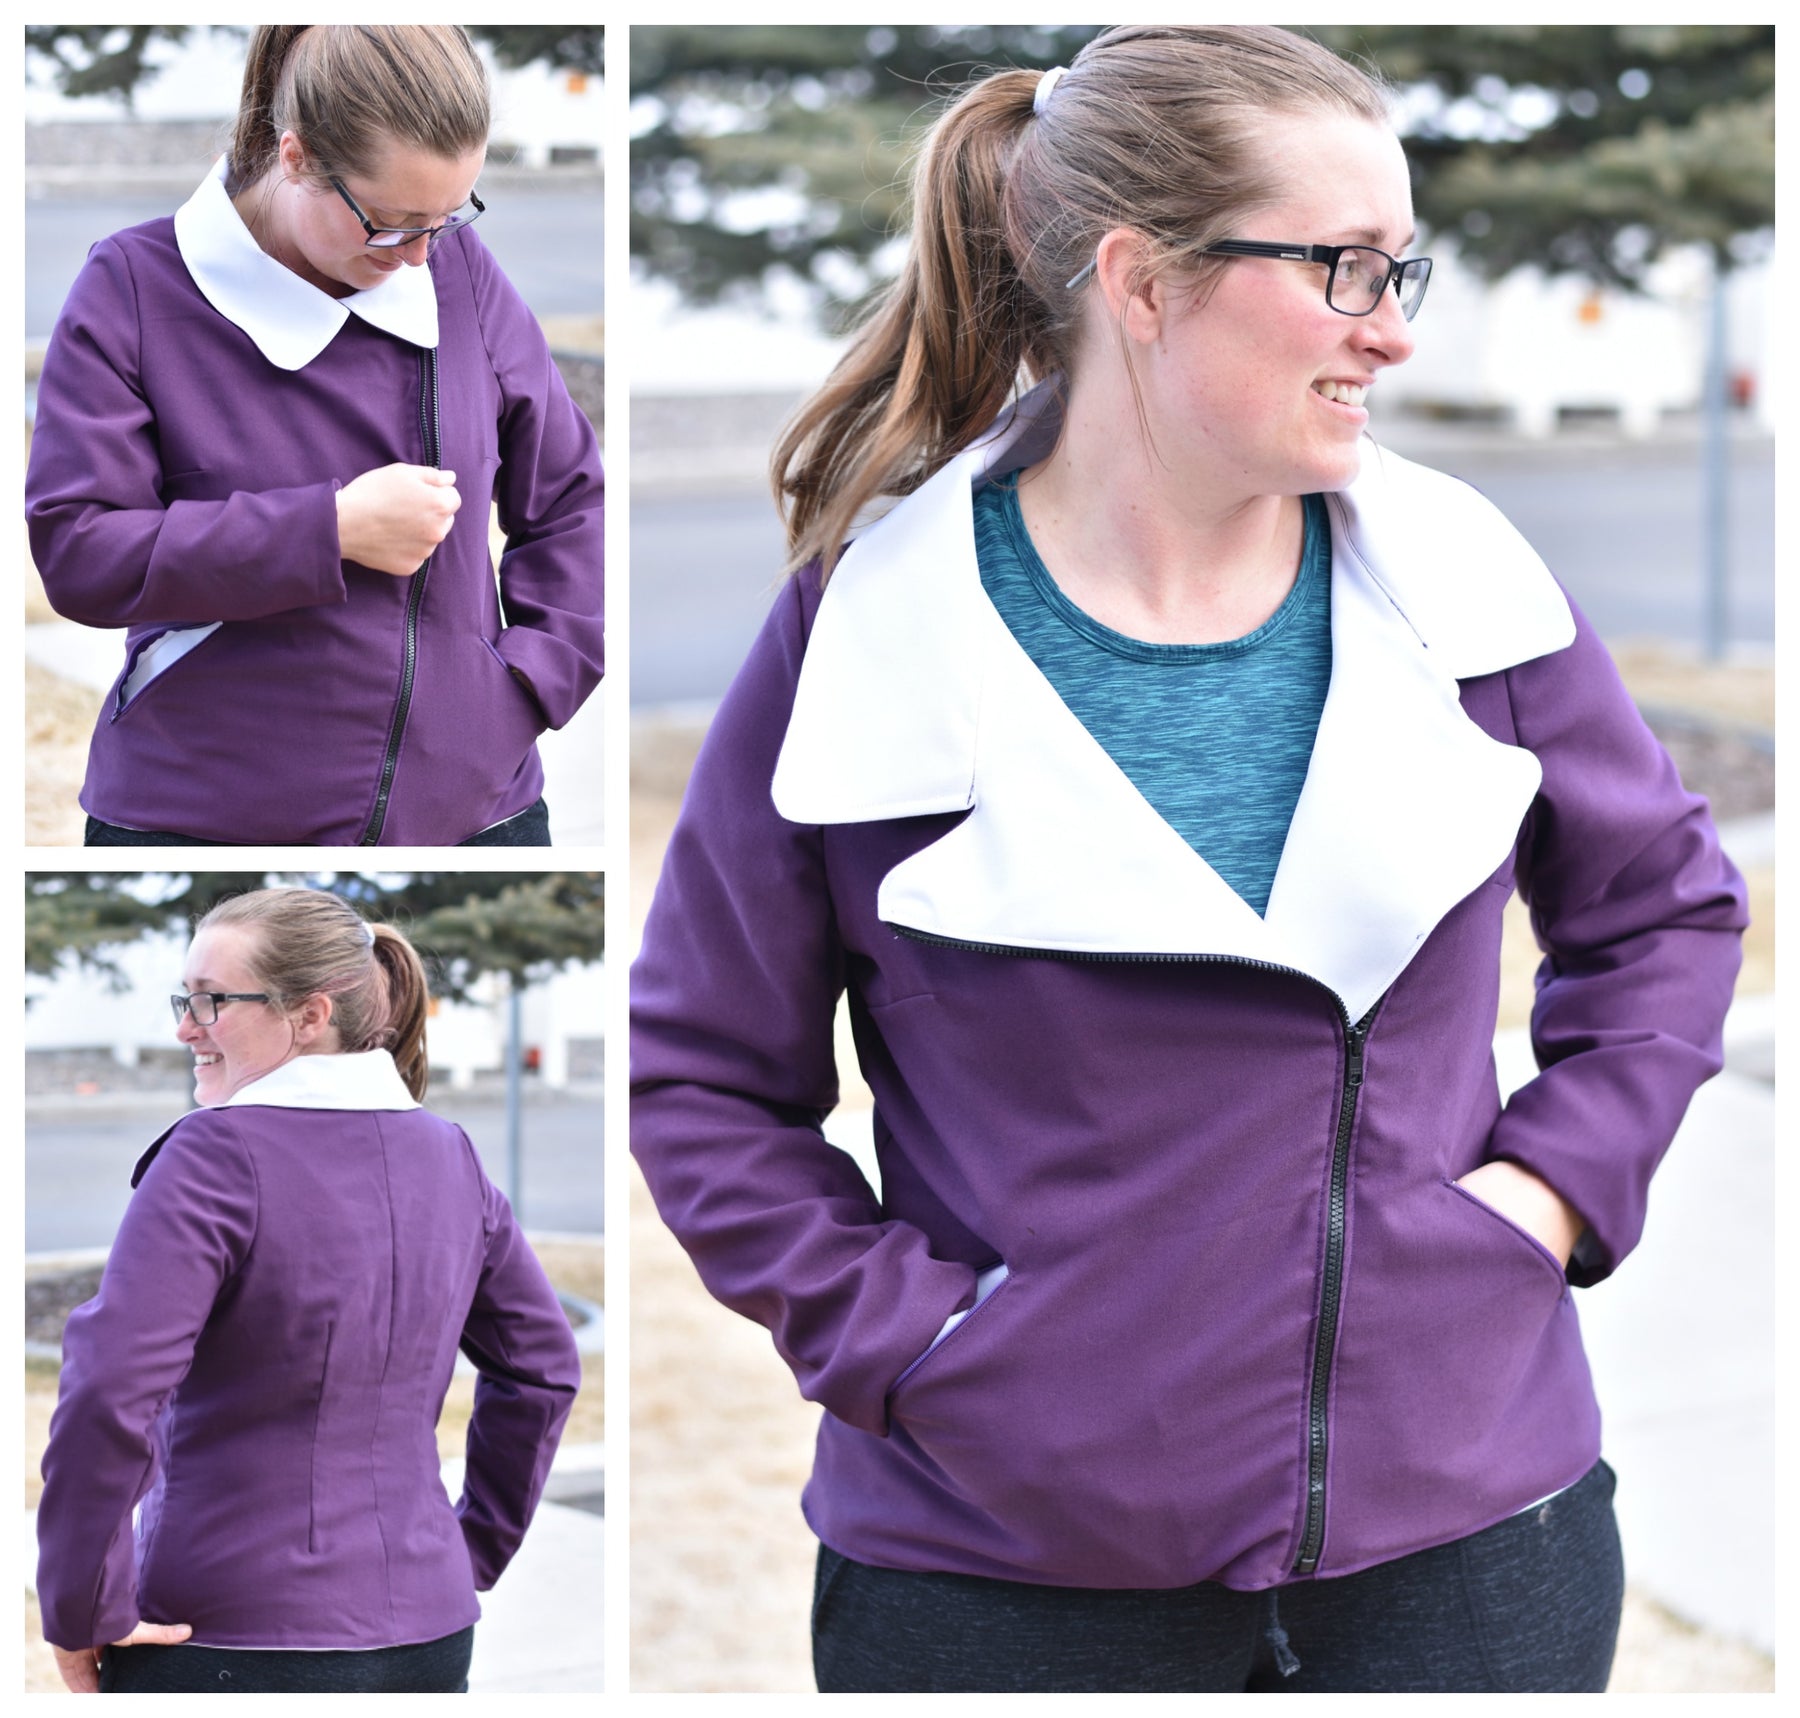 DIY Patagonia Fleece Sweater - 1/4 zip jacket tutorial from scratch -  YouTube